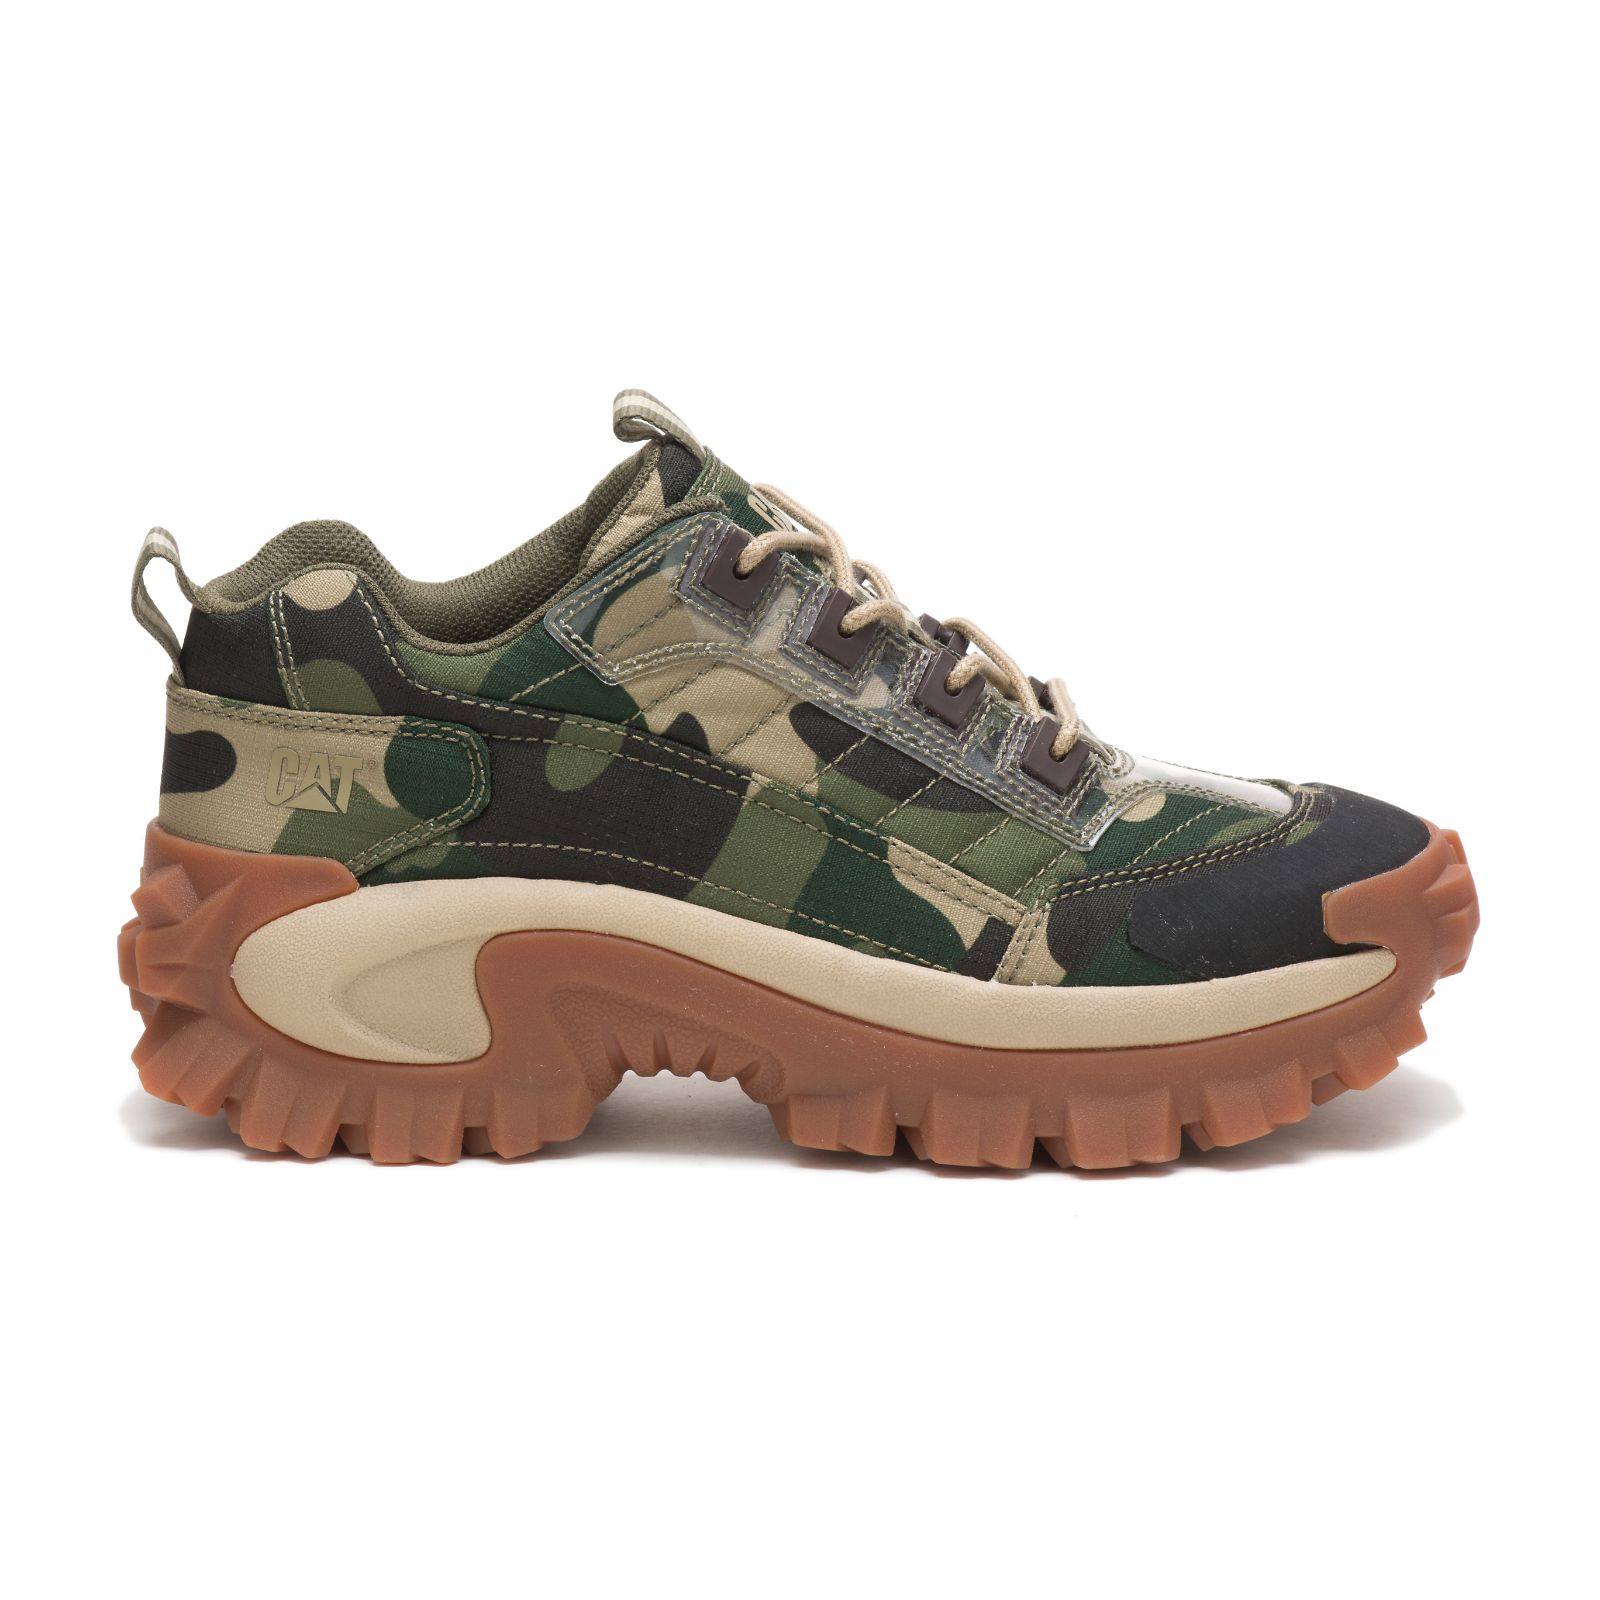 Caterpillar Shoes Online - Caterpillar Intruder Mens Casual Shoes Camo (302516-KYT)